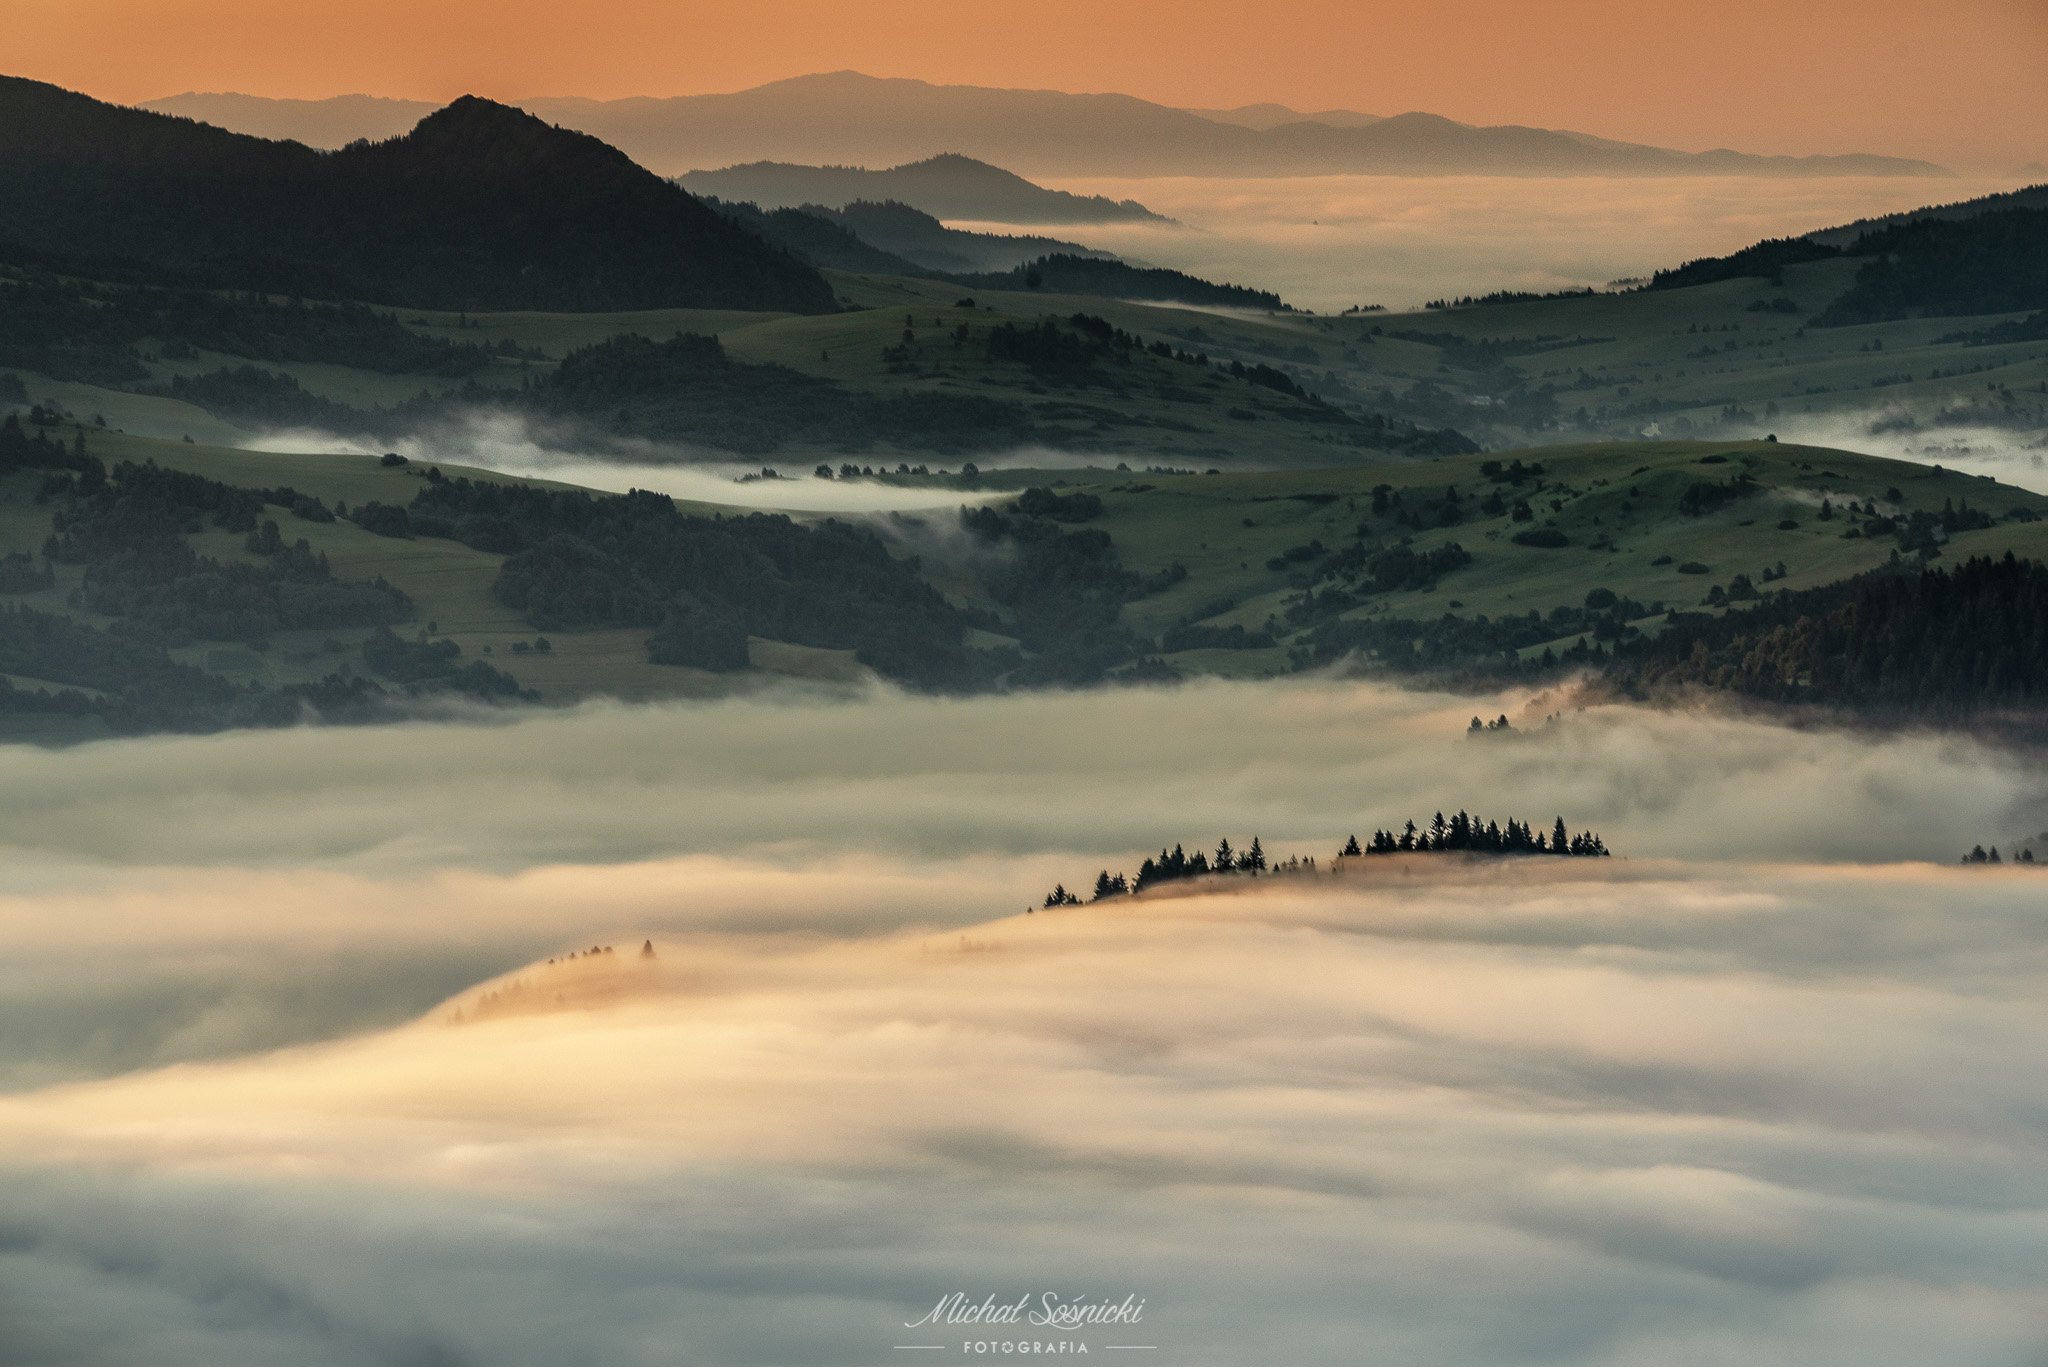 #poland #foggy #sunrise #mountains #landscape #photo #amazing #nature #pieniny, Michał Sośnicki